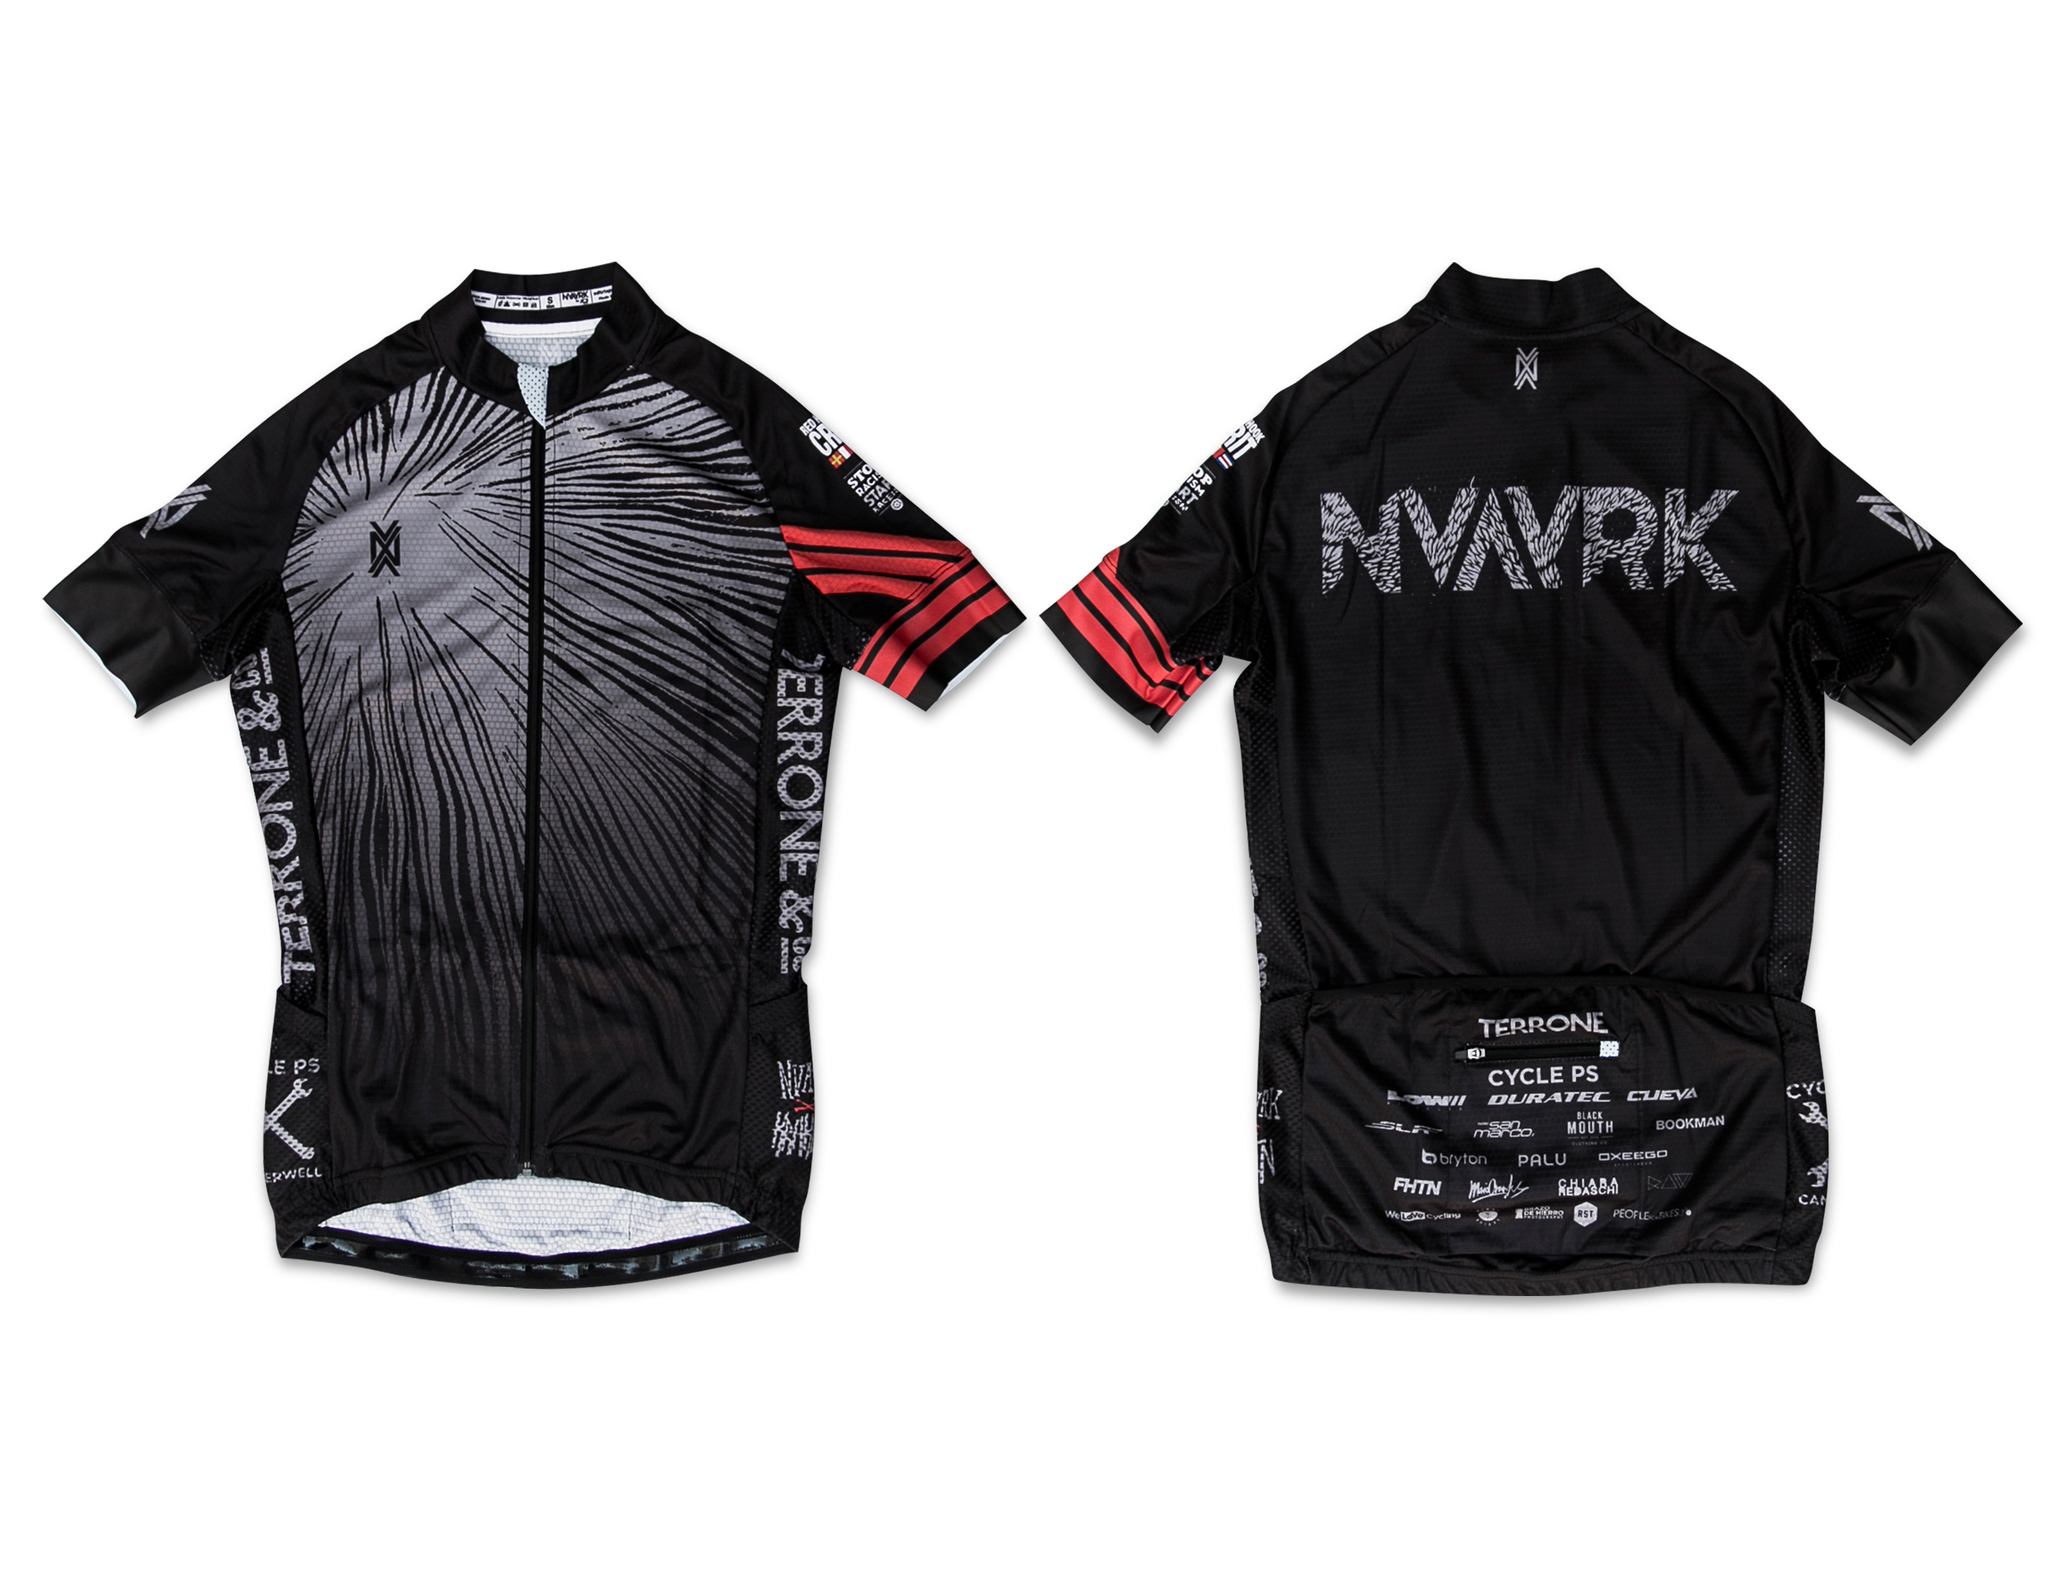 NVAYRK X KRAKEN Cycling Kit